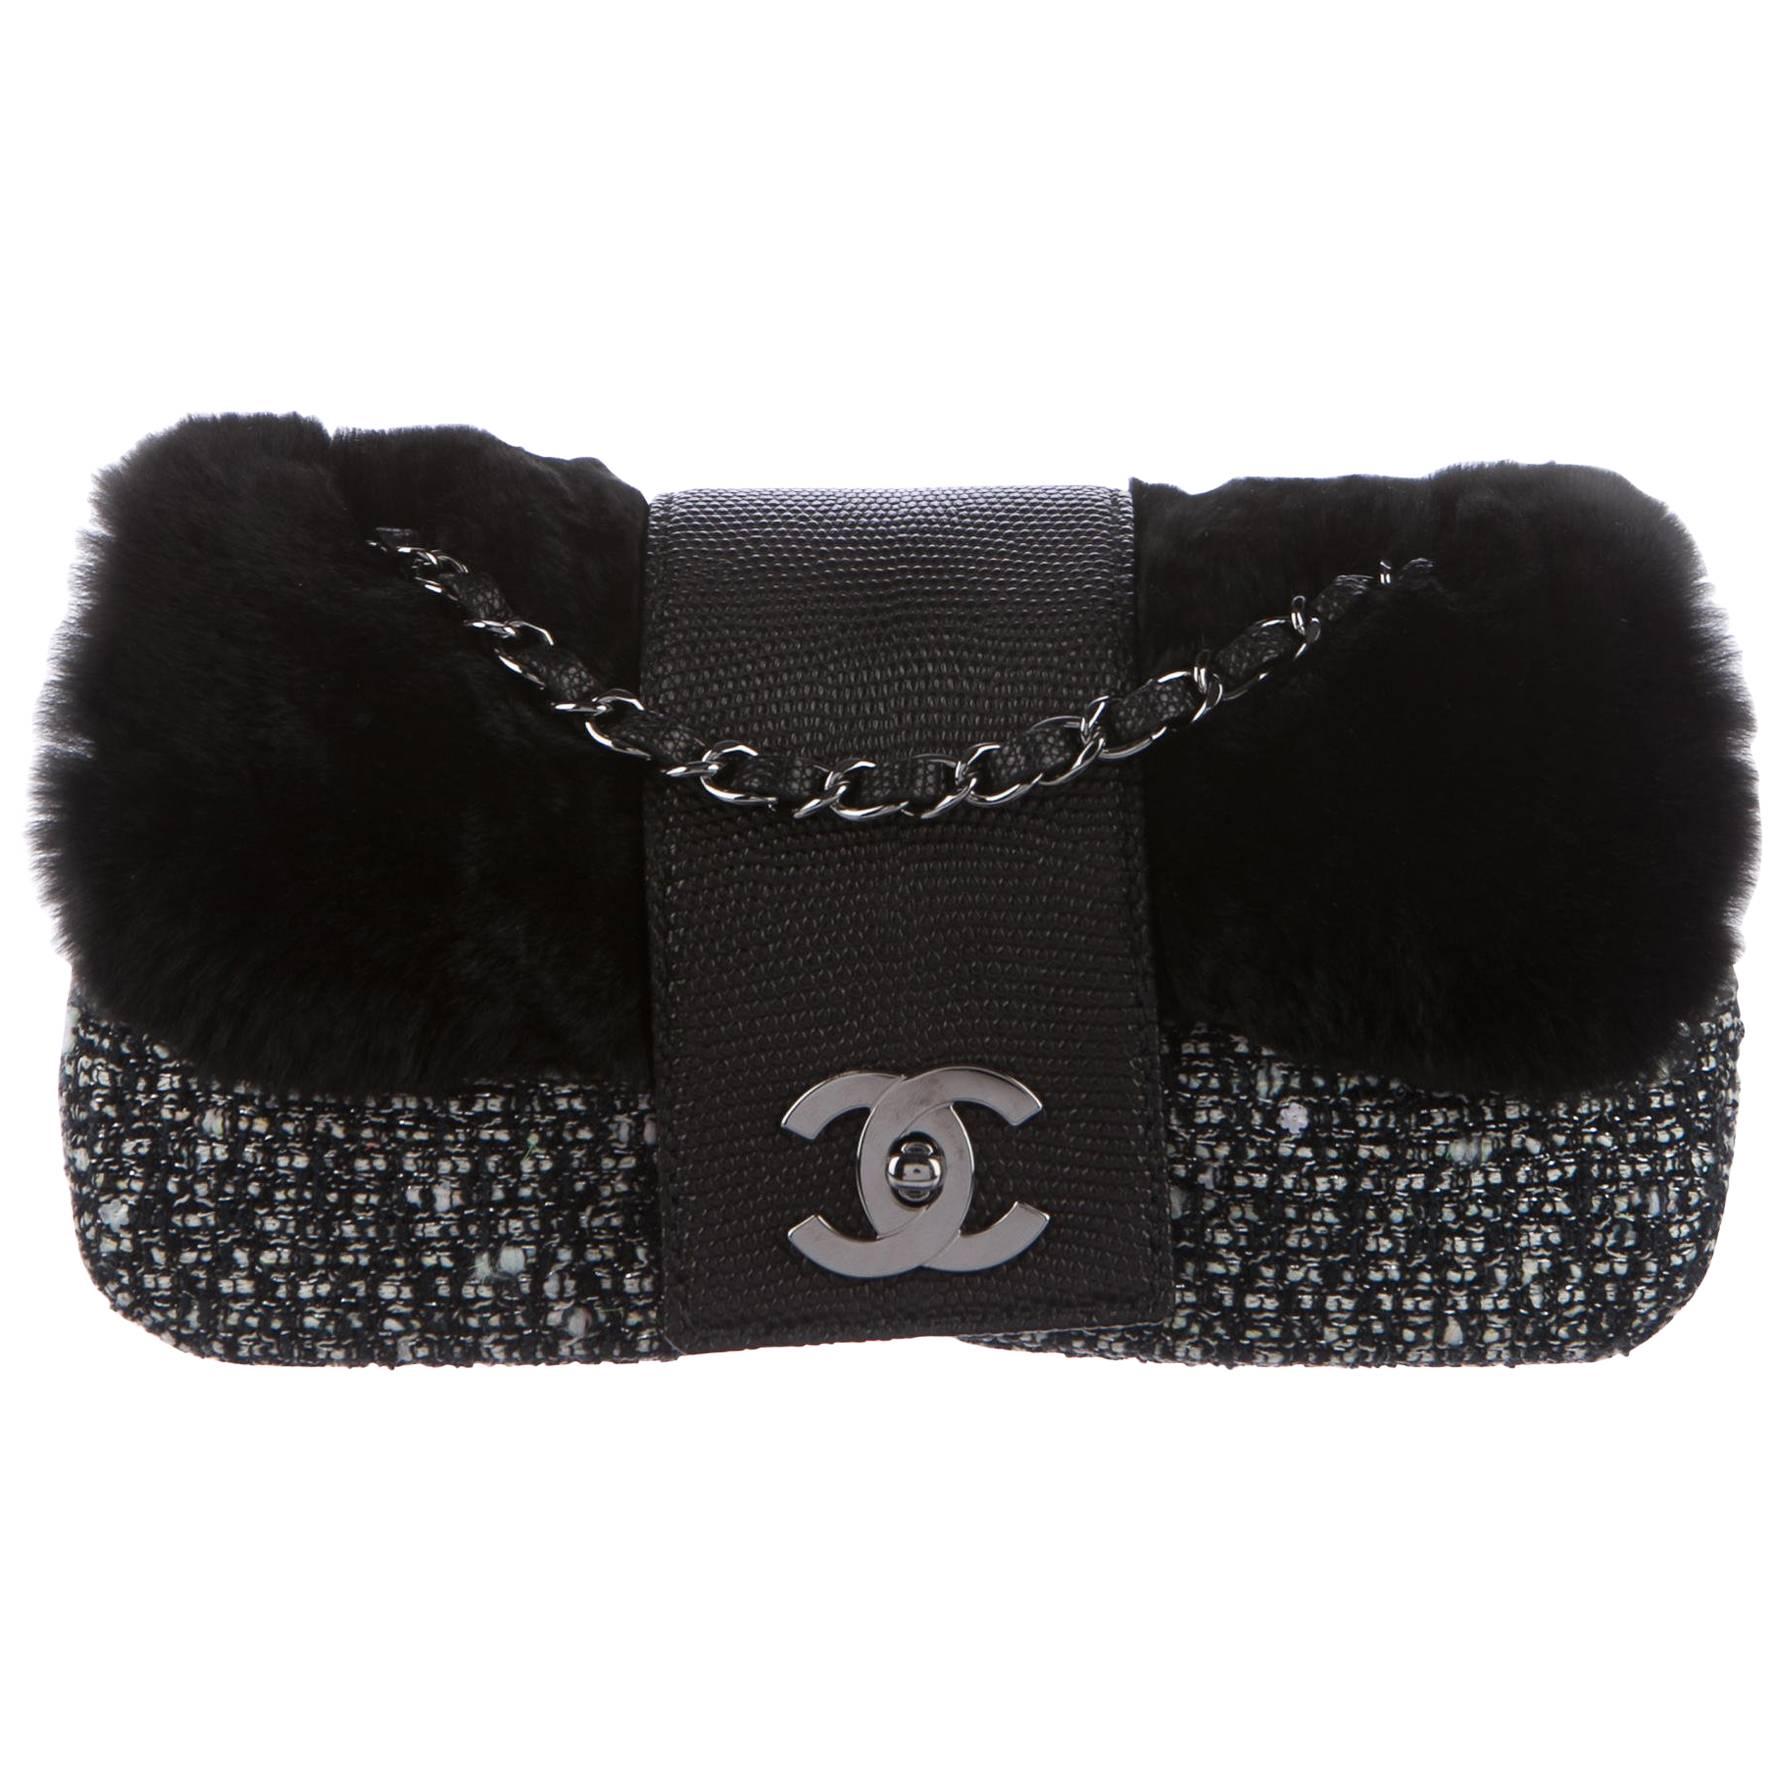 Chanel NEW Limited Edition Black Tweed Leather Lizard Fur Shoulder Flap Bag